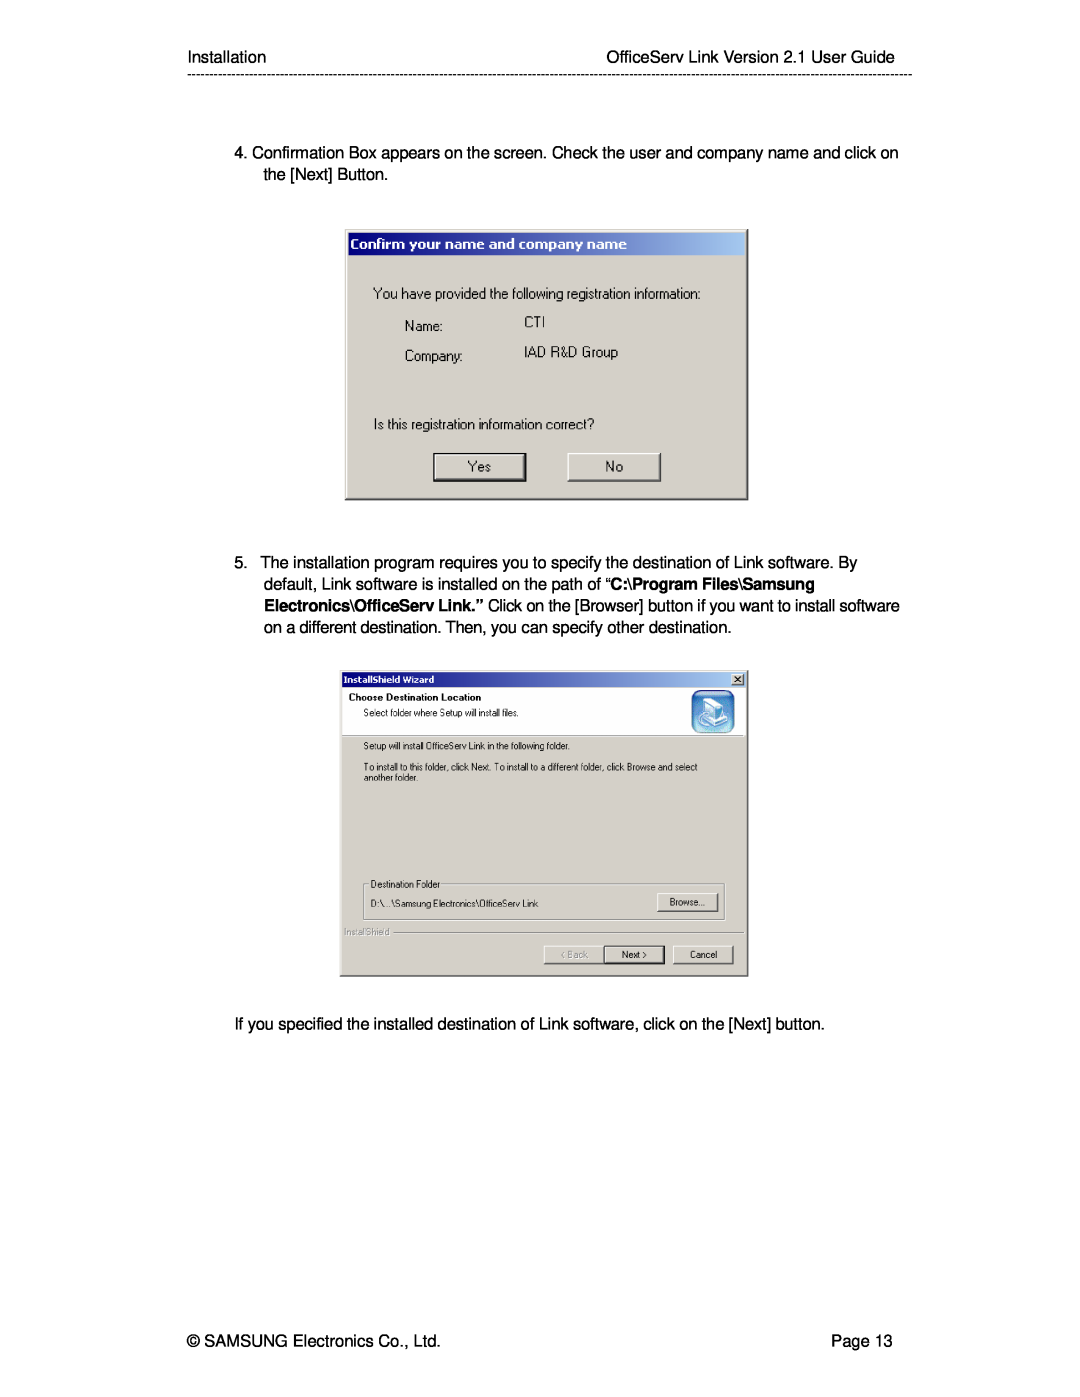 Samsung manual InstallationOfficeServ Link Version 2.1 User Guide 